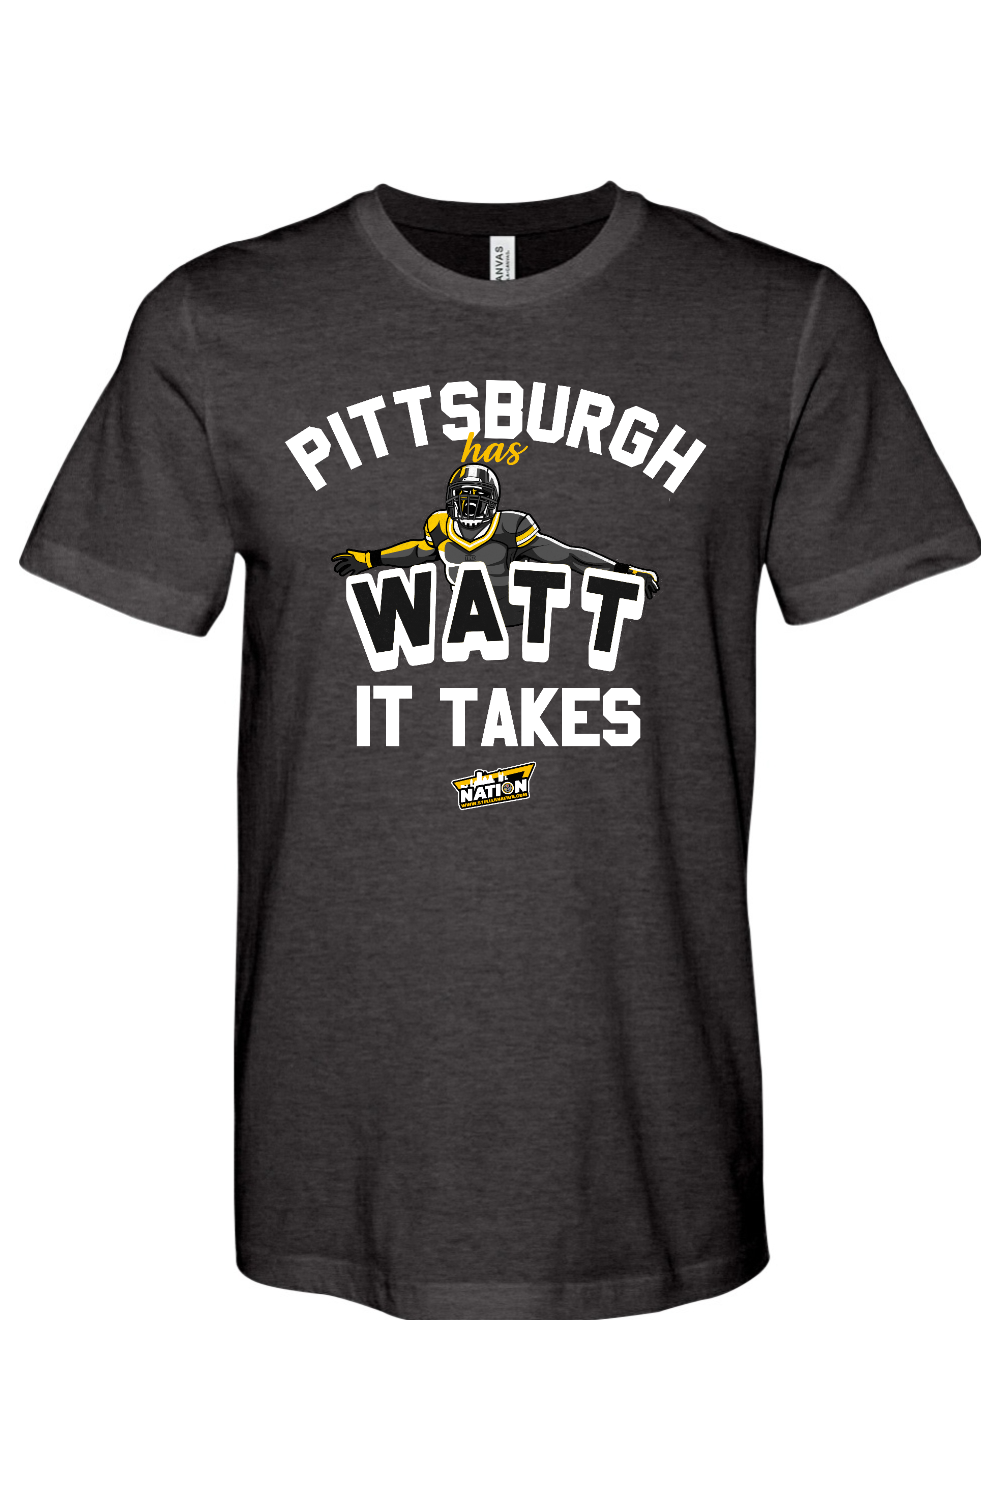 Pittsburgh Has Watt It Takes - Yinzylvania